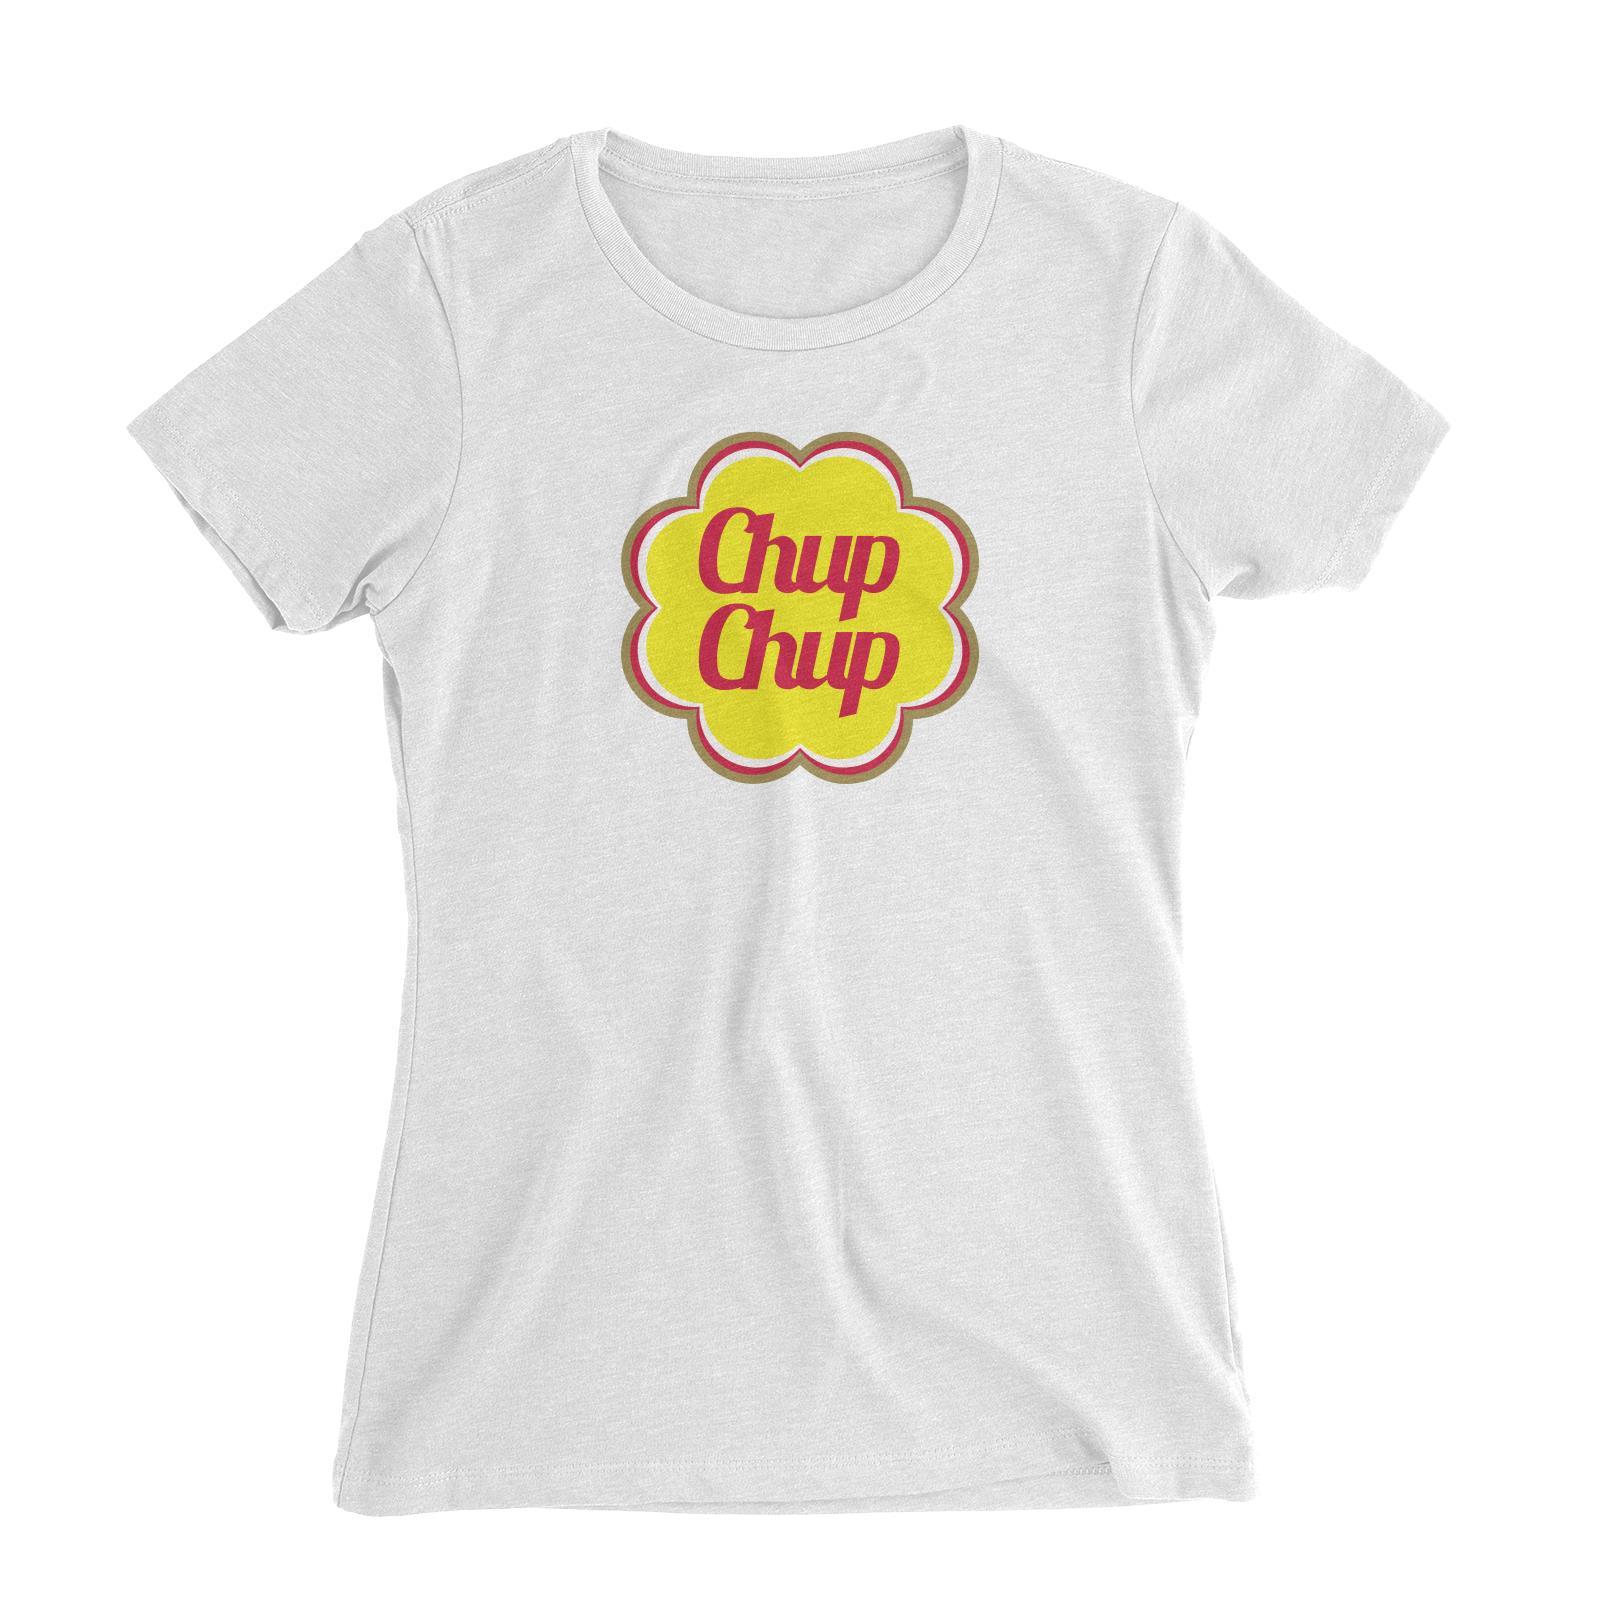 Slang Statement Chup Chup Women's Slim FIt T-Shirt